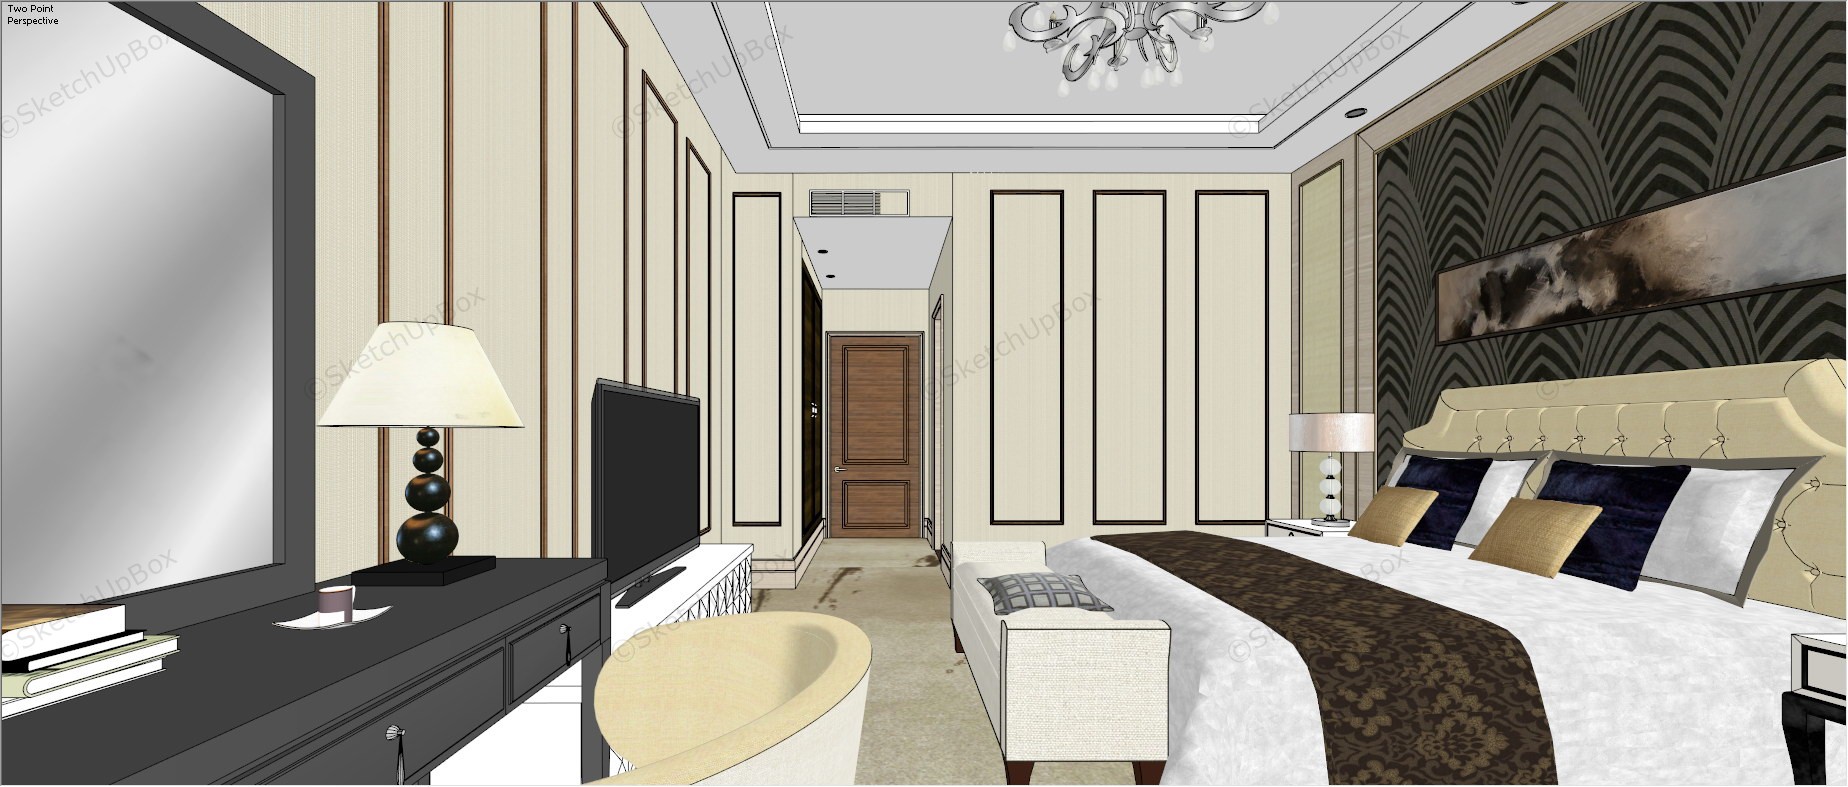 Deluxe King Room Interior Design sketchup model preview - SketchupBox